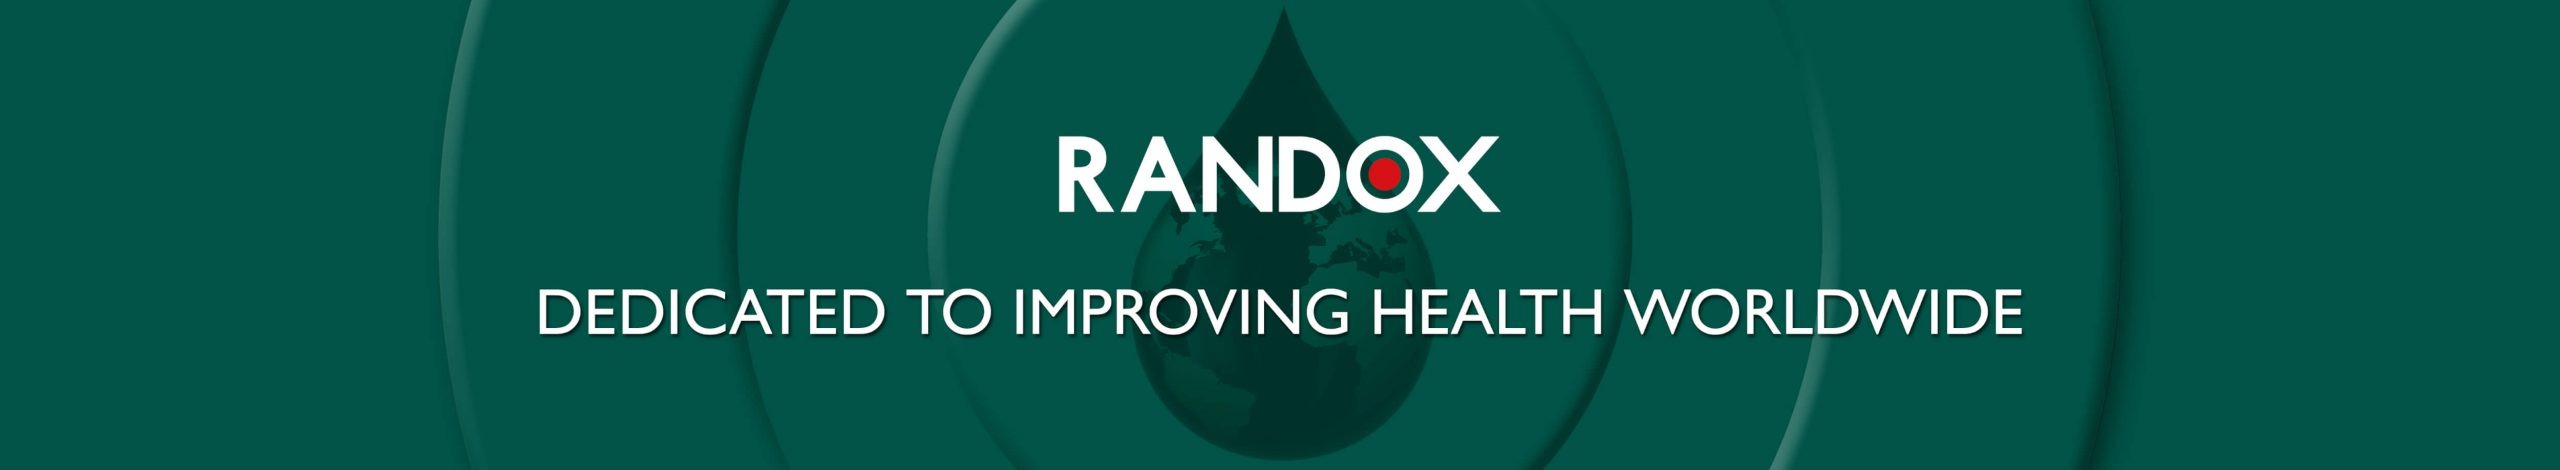 randox banner